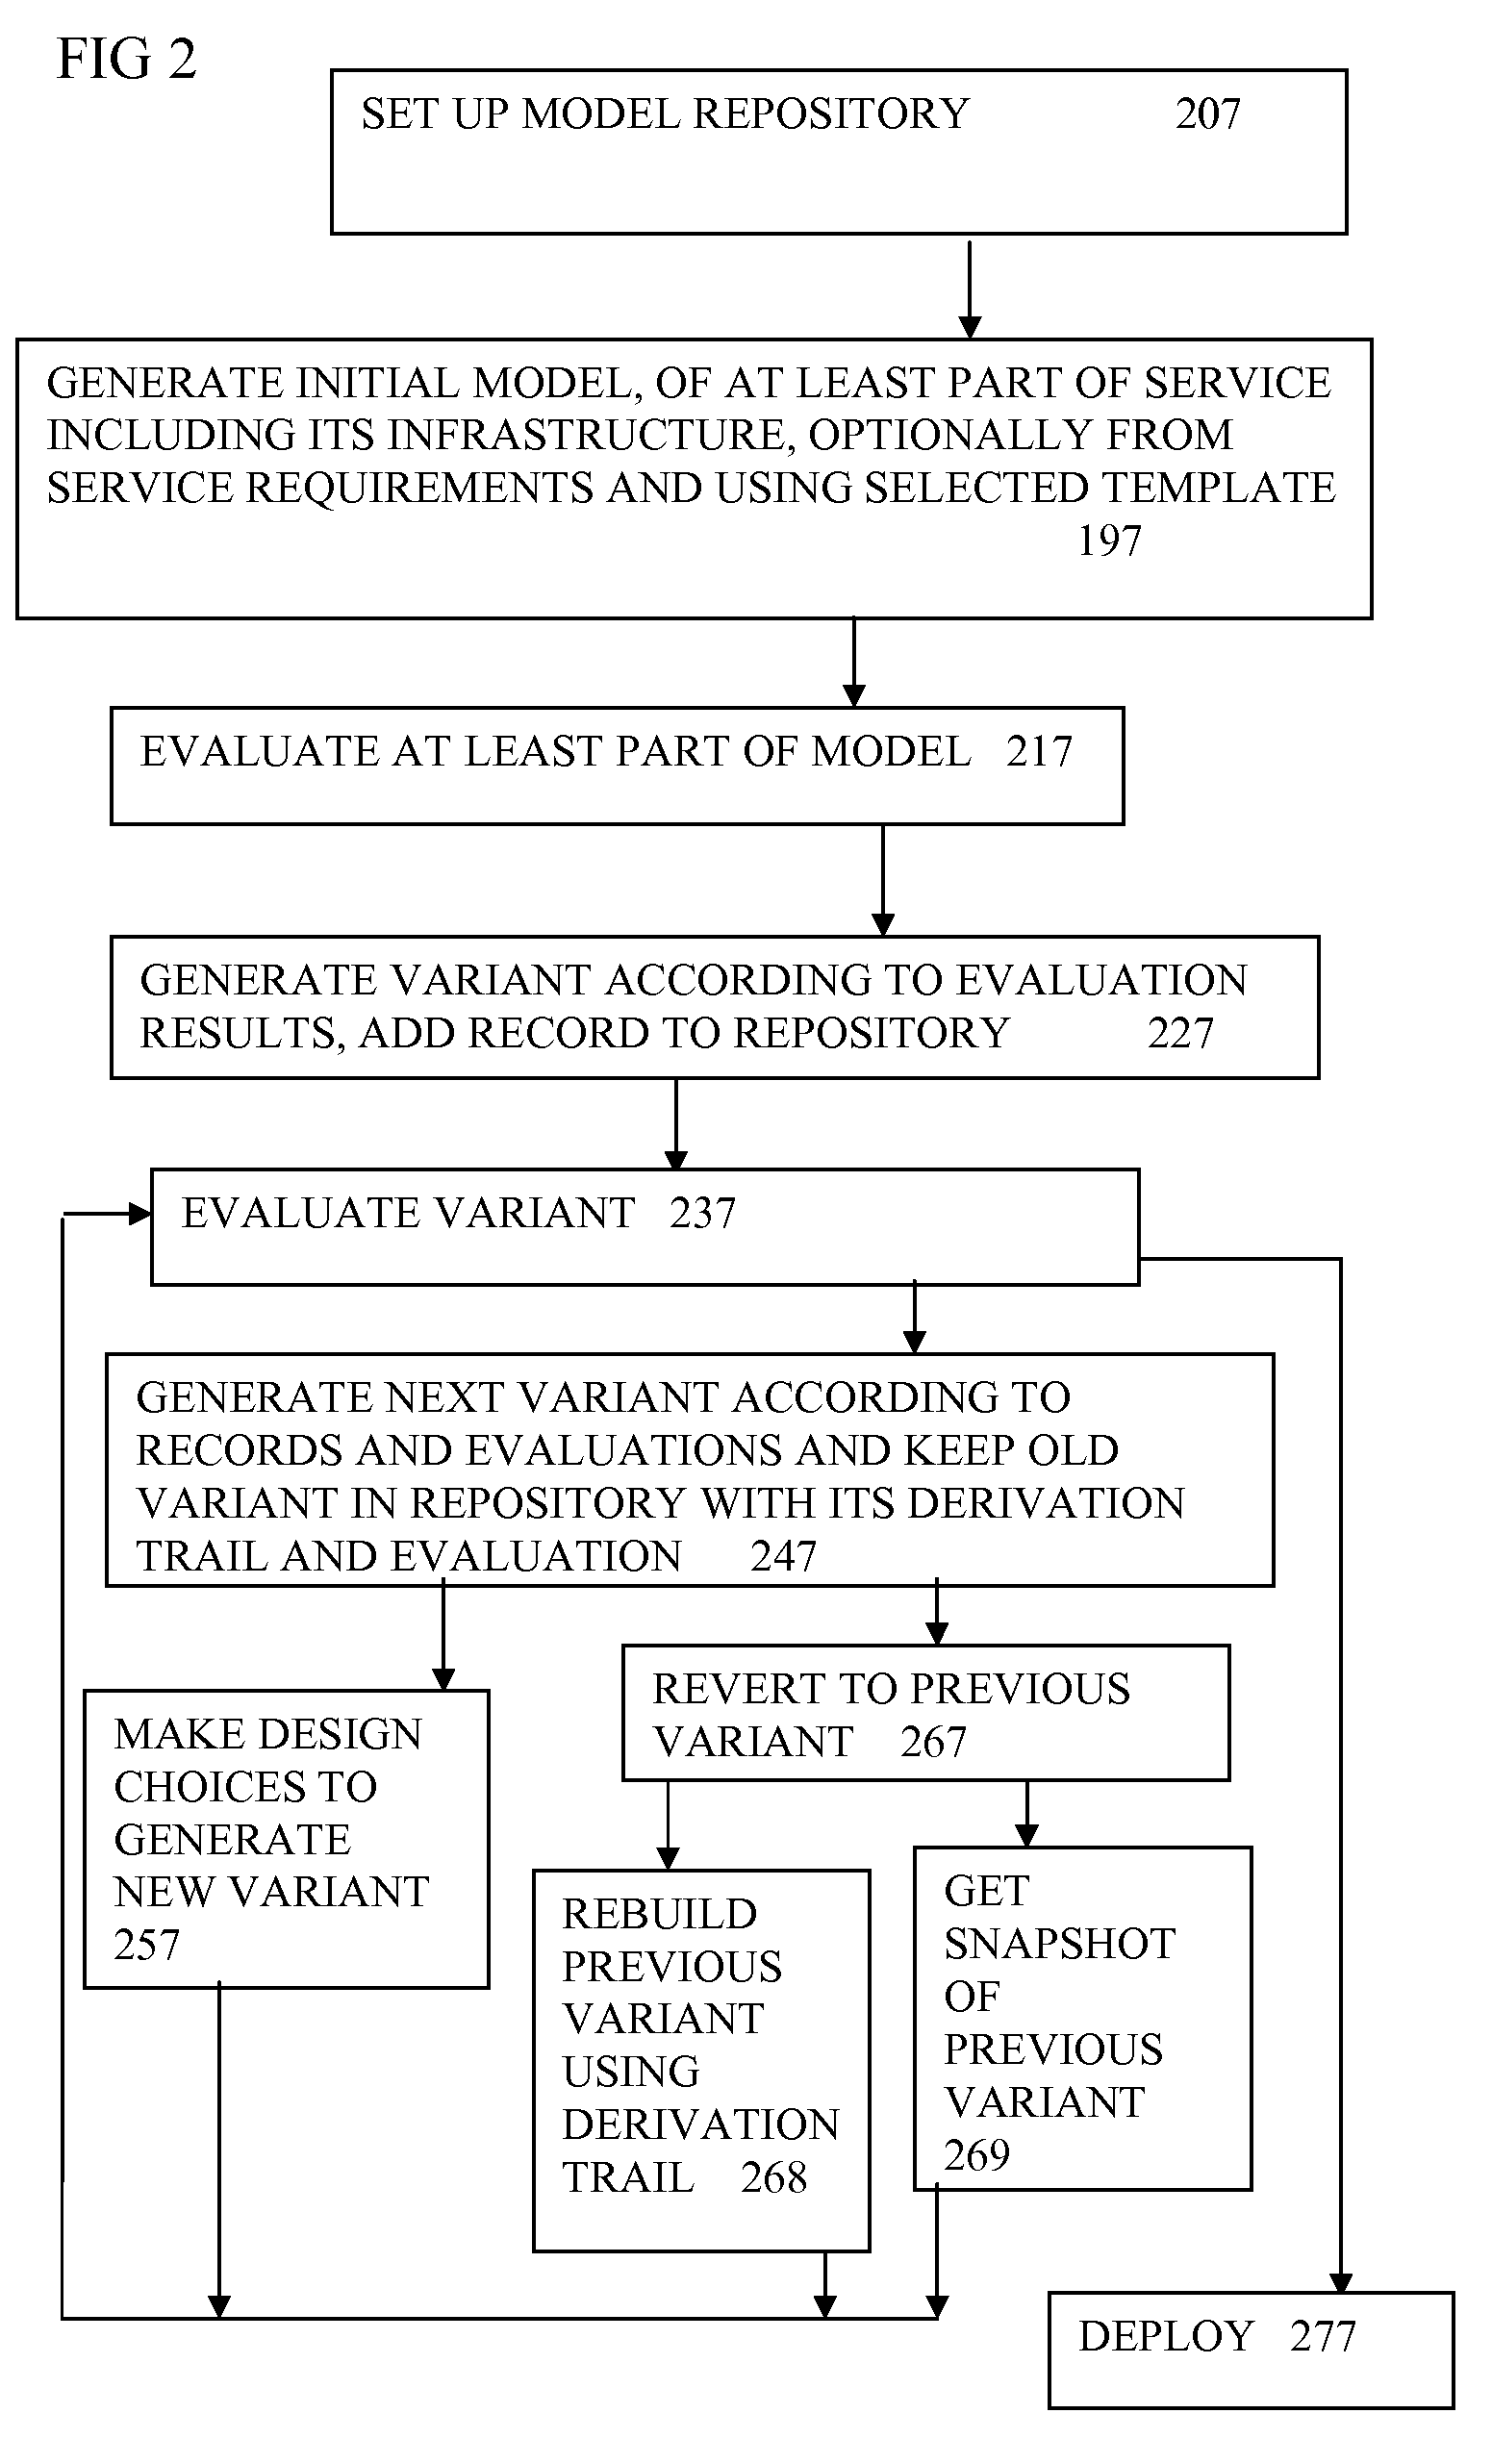 Management of Variants of Model of Service